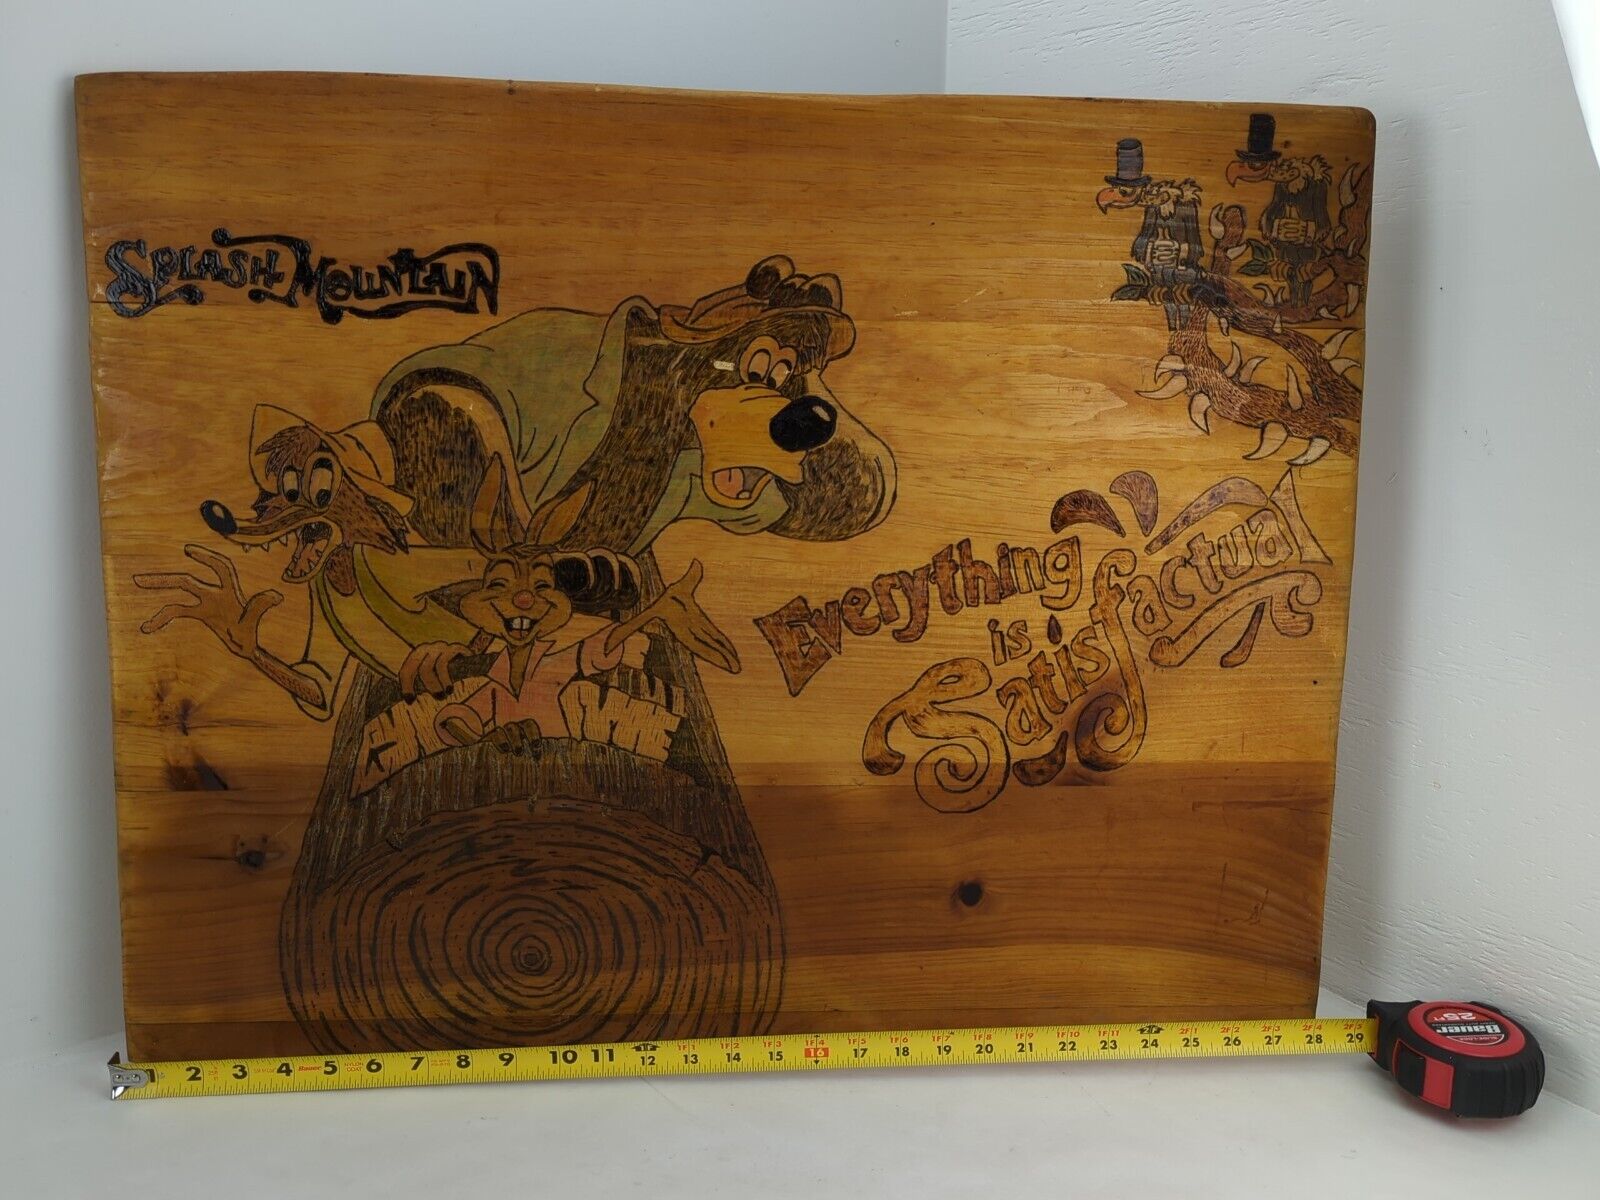 28.5 x 22.5 inch Disney Splash Mountain Handmade Wood Burning Wall Art Vintage